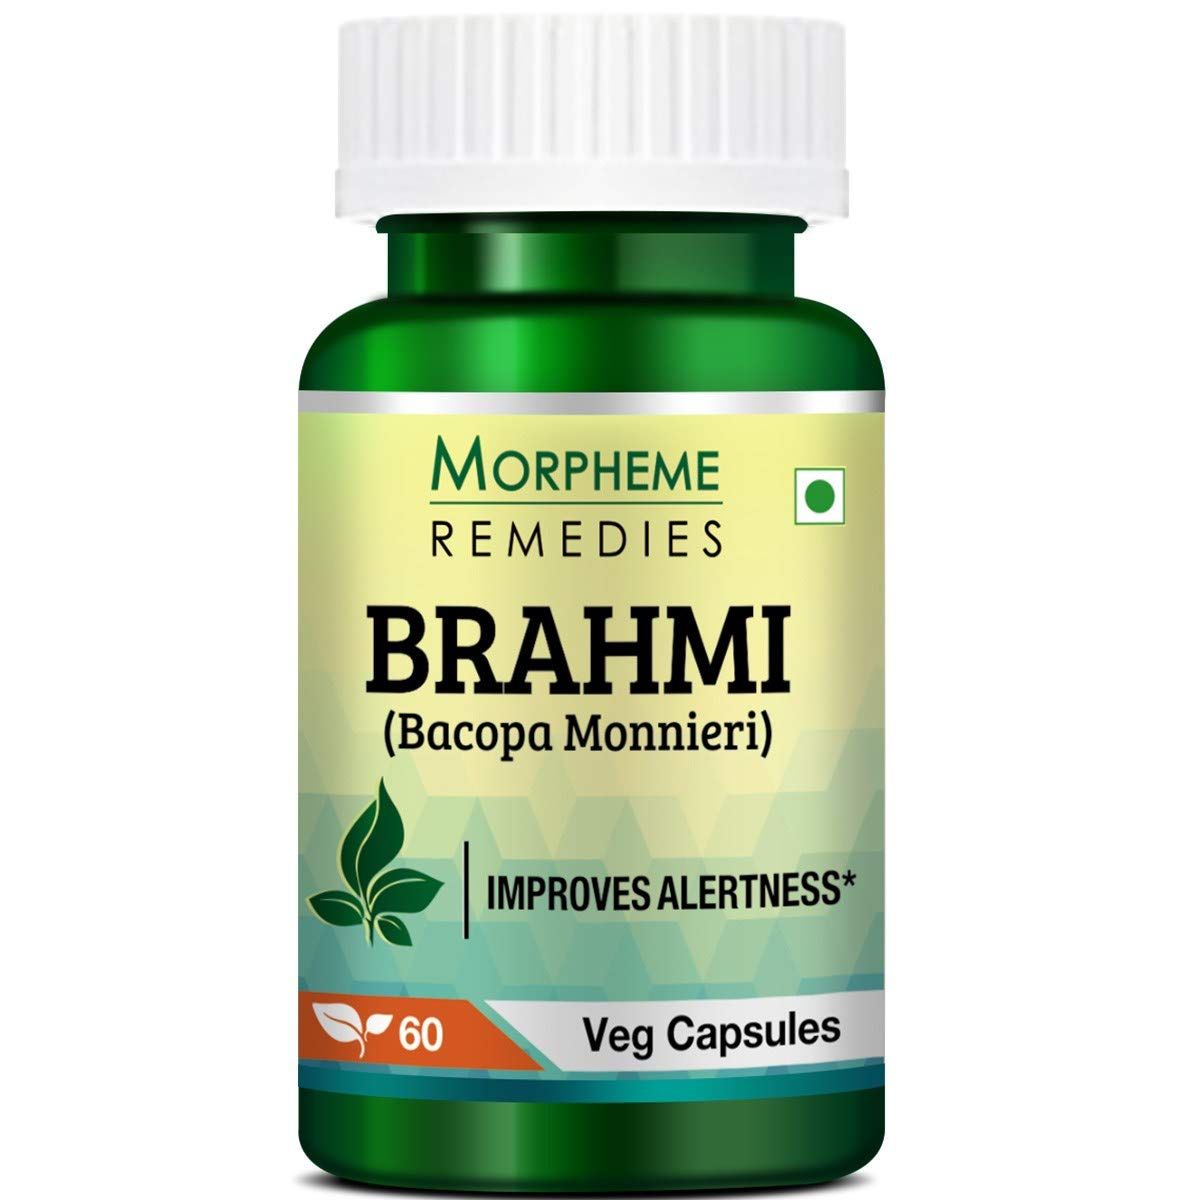 Morpheme Remedies Brahmi Extract Image